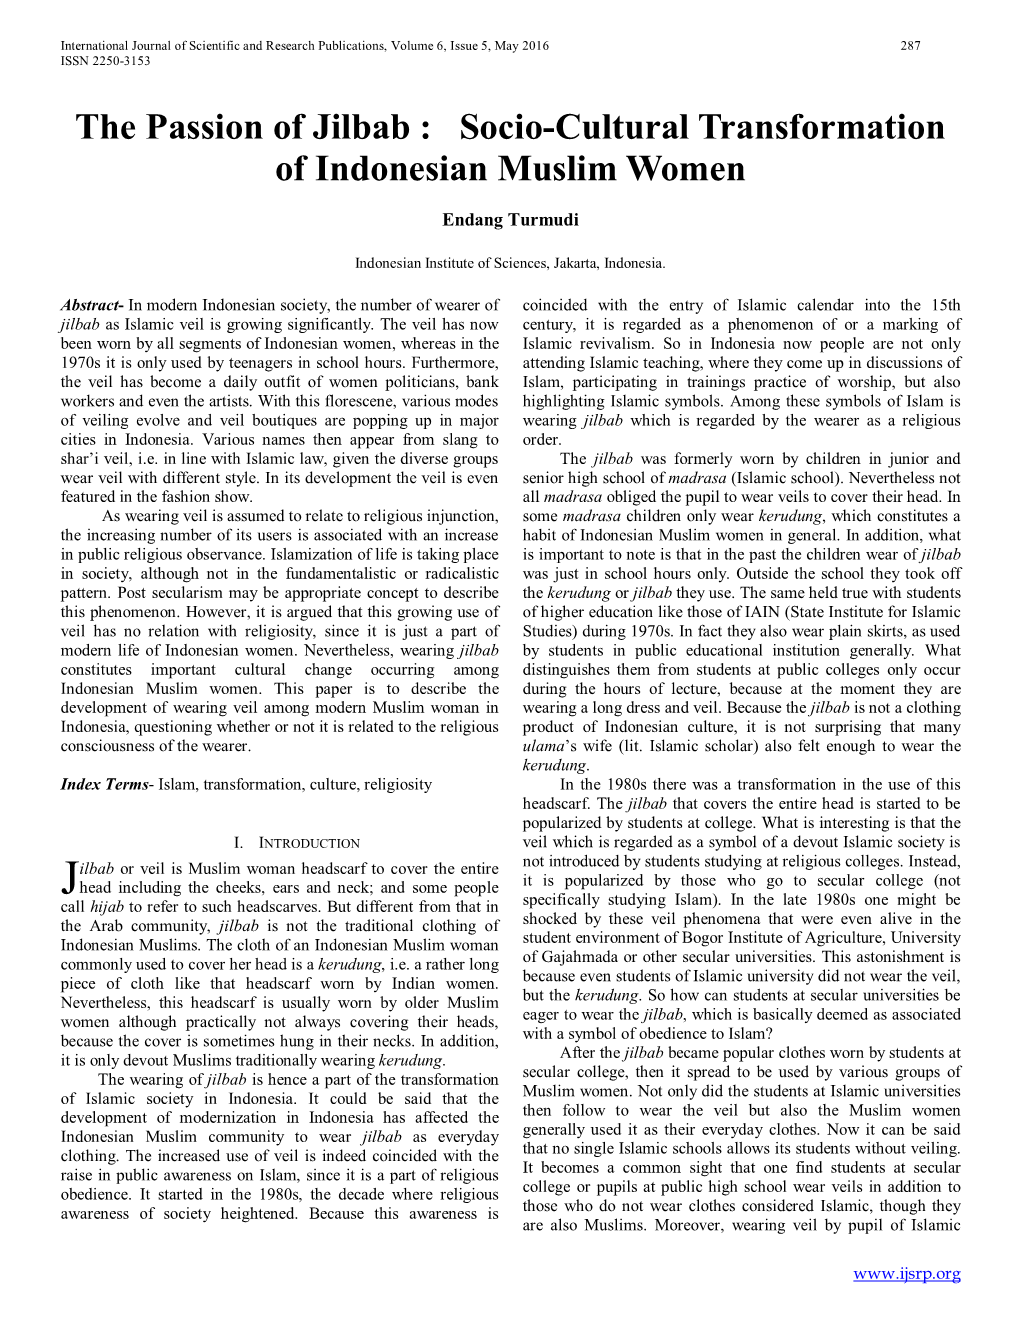 Socio-Cultural Transformation of Indonesian Muslim Women